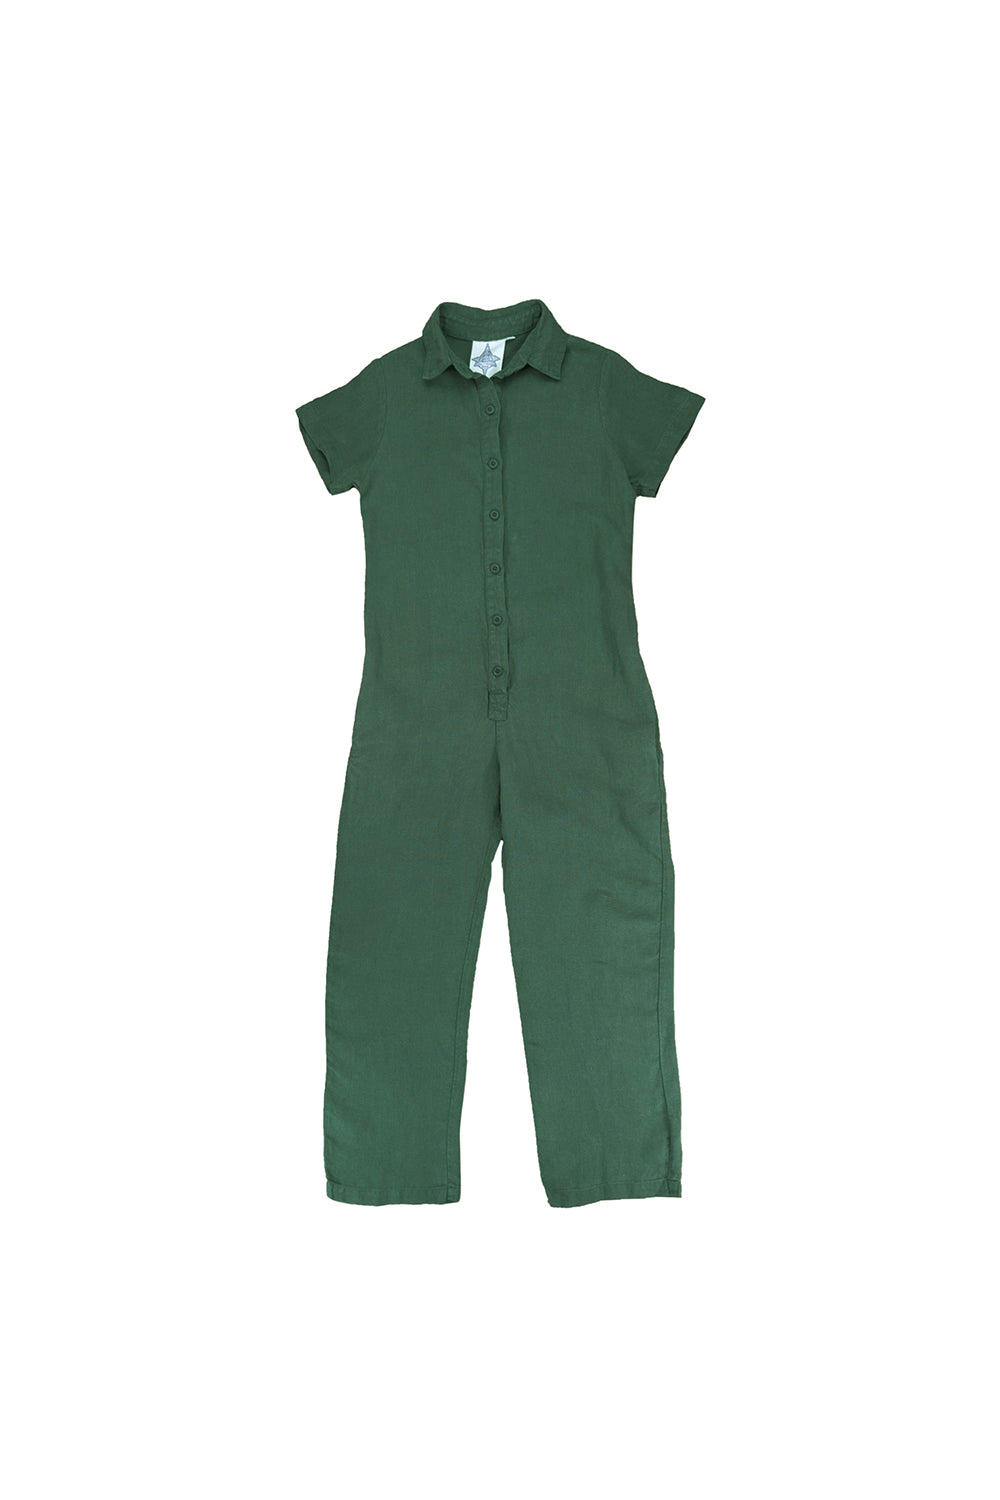 Stillwater Polo Pant Romper | Jungmaven Hemp Clothing & Accessories / Color:Hunter Green